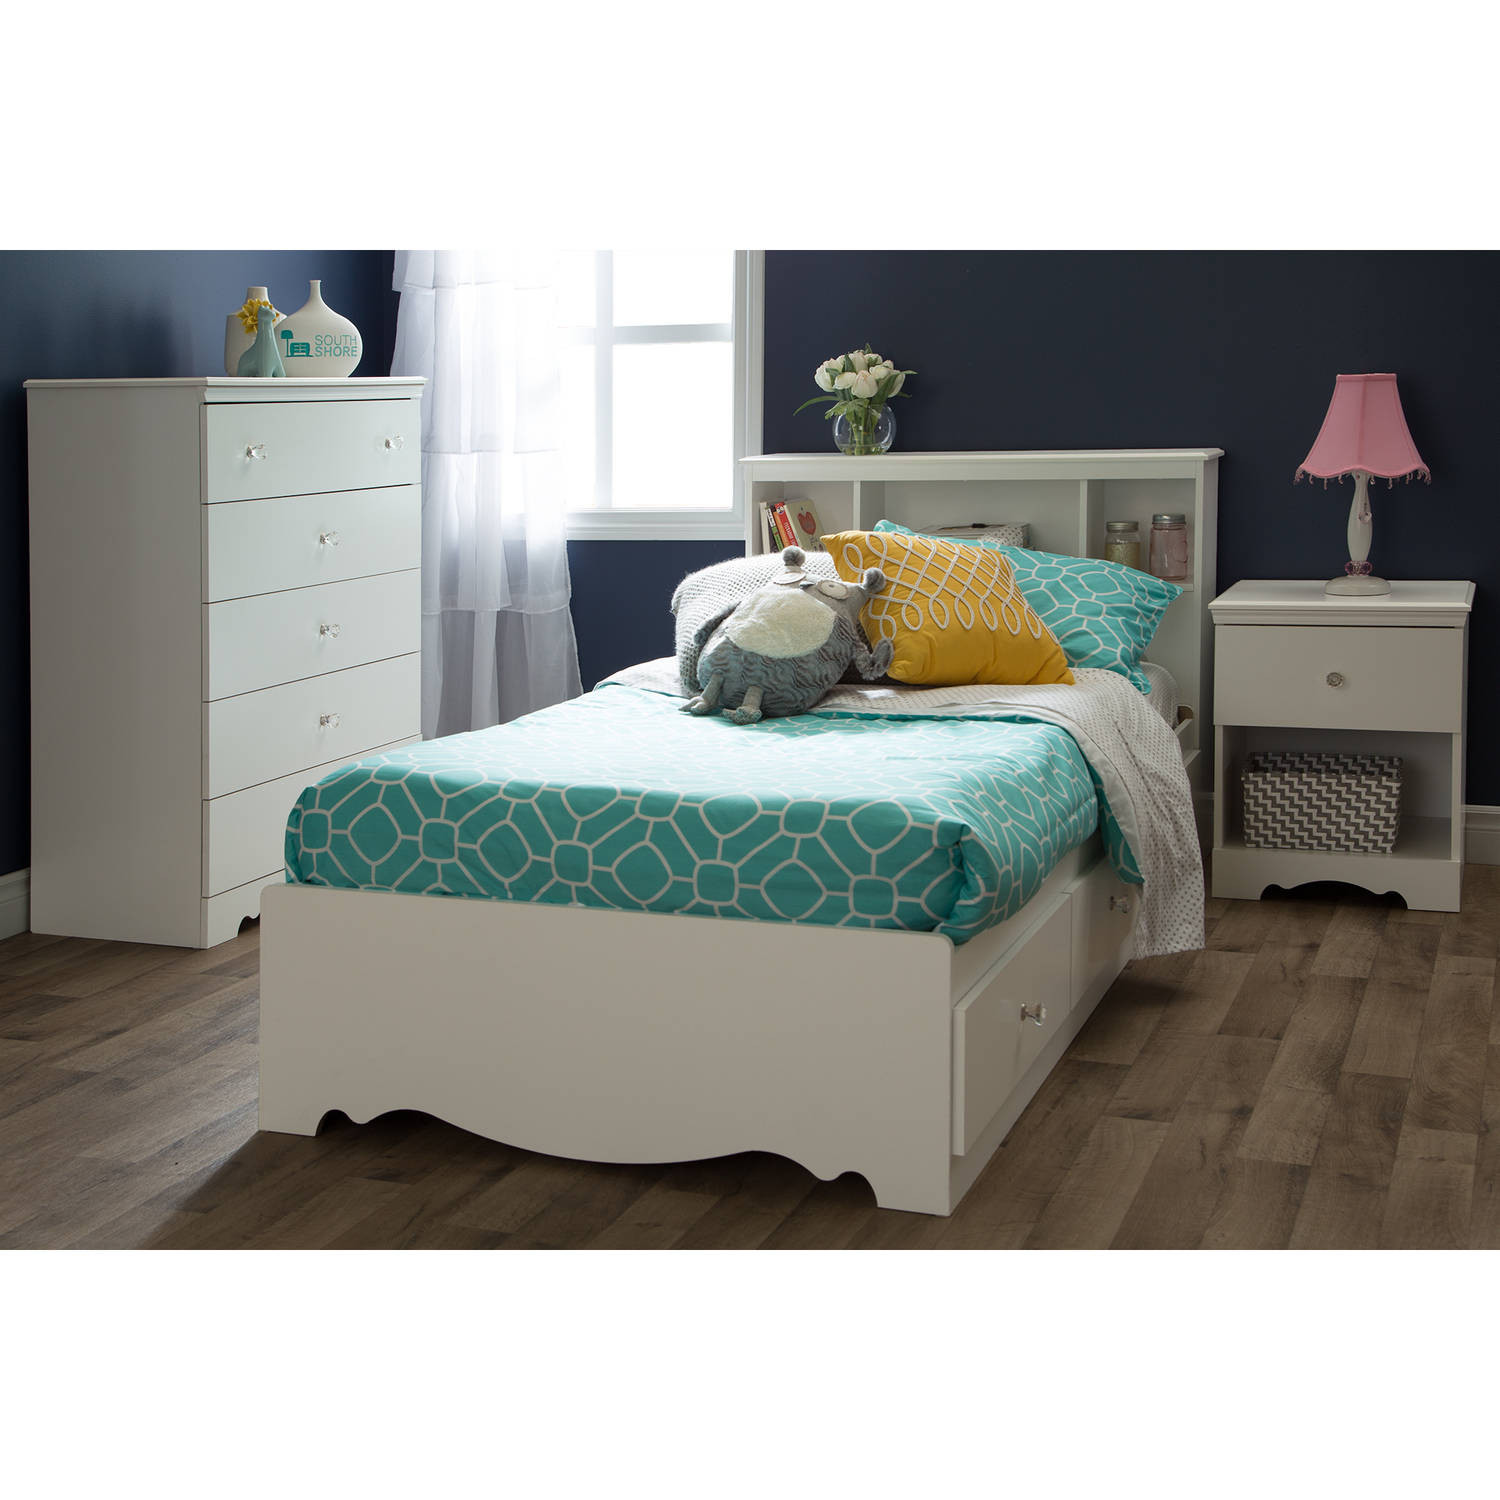 Walmart Kids Bedroom Sets Luxury south Shore Crystal Kids Bedroom Furniture Collection